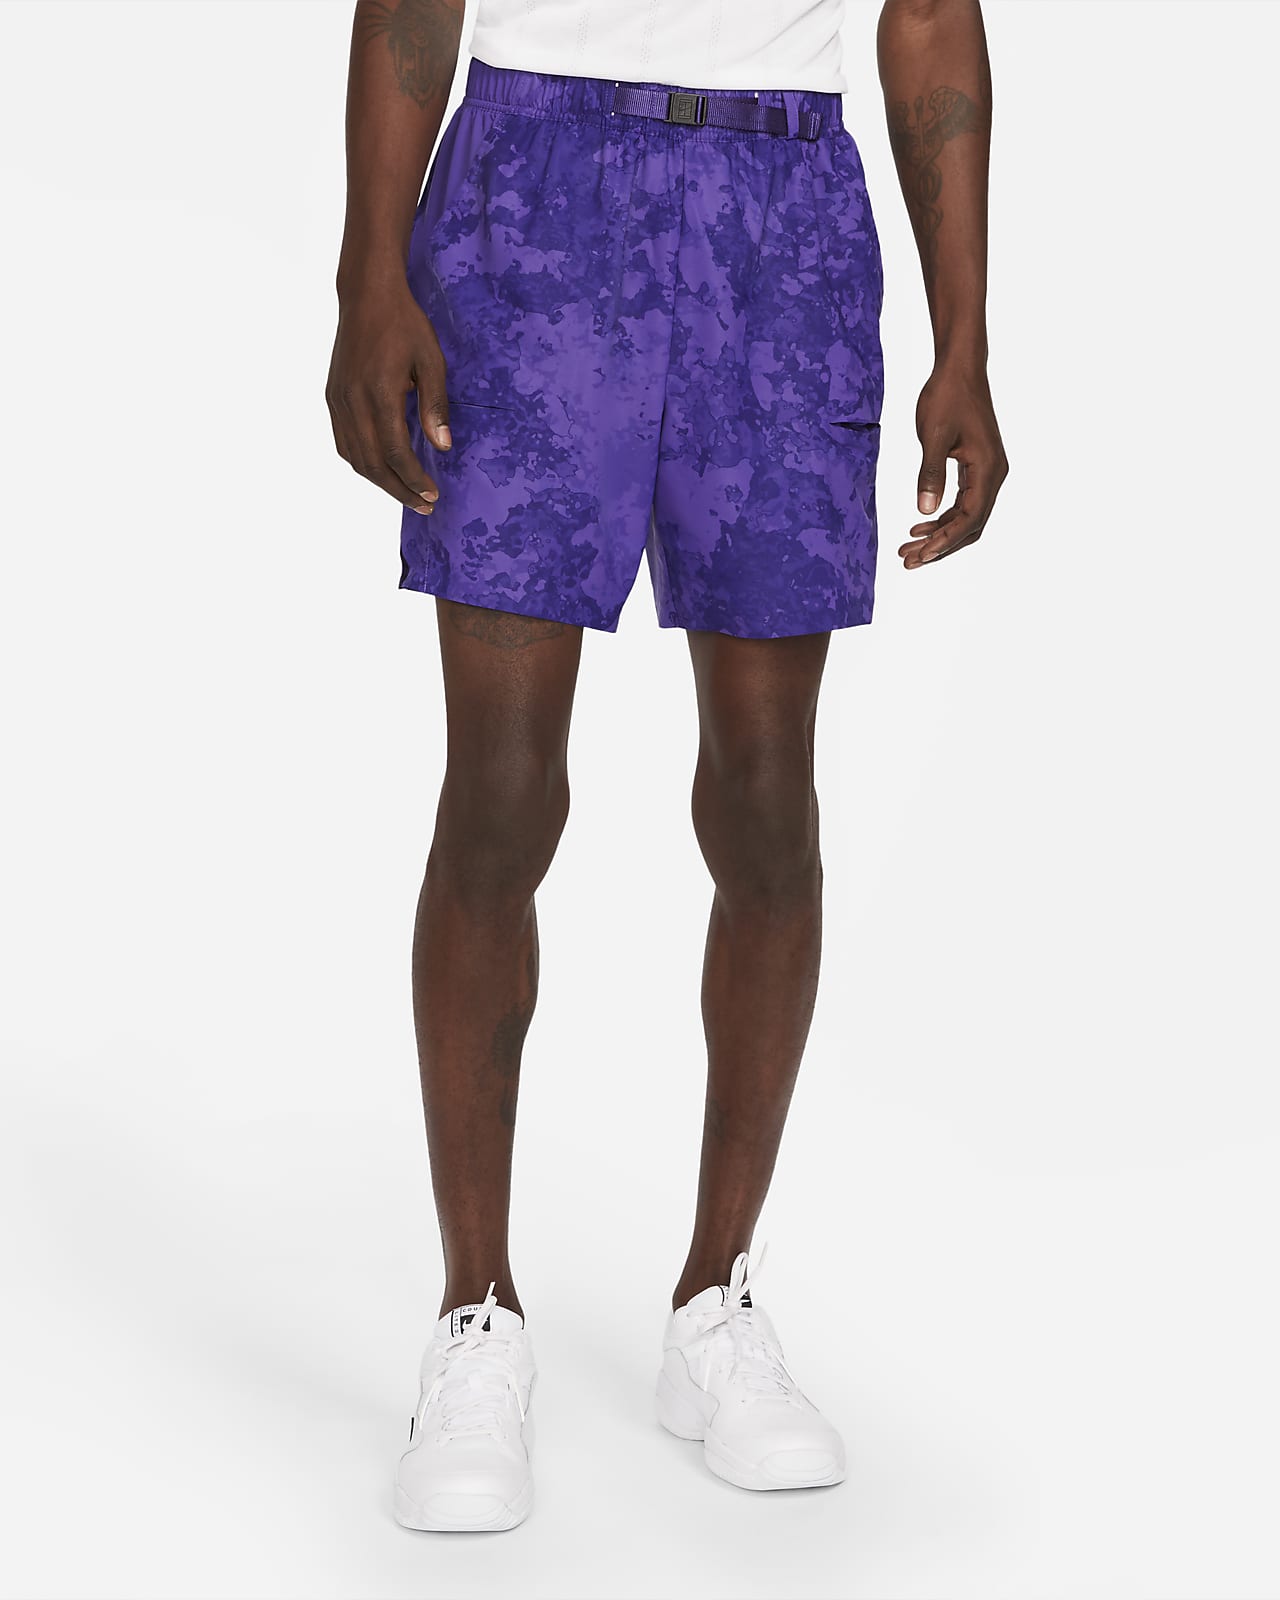 purple nike shorts mens